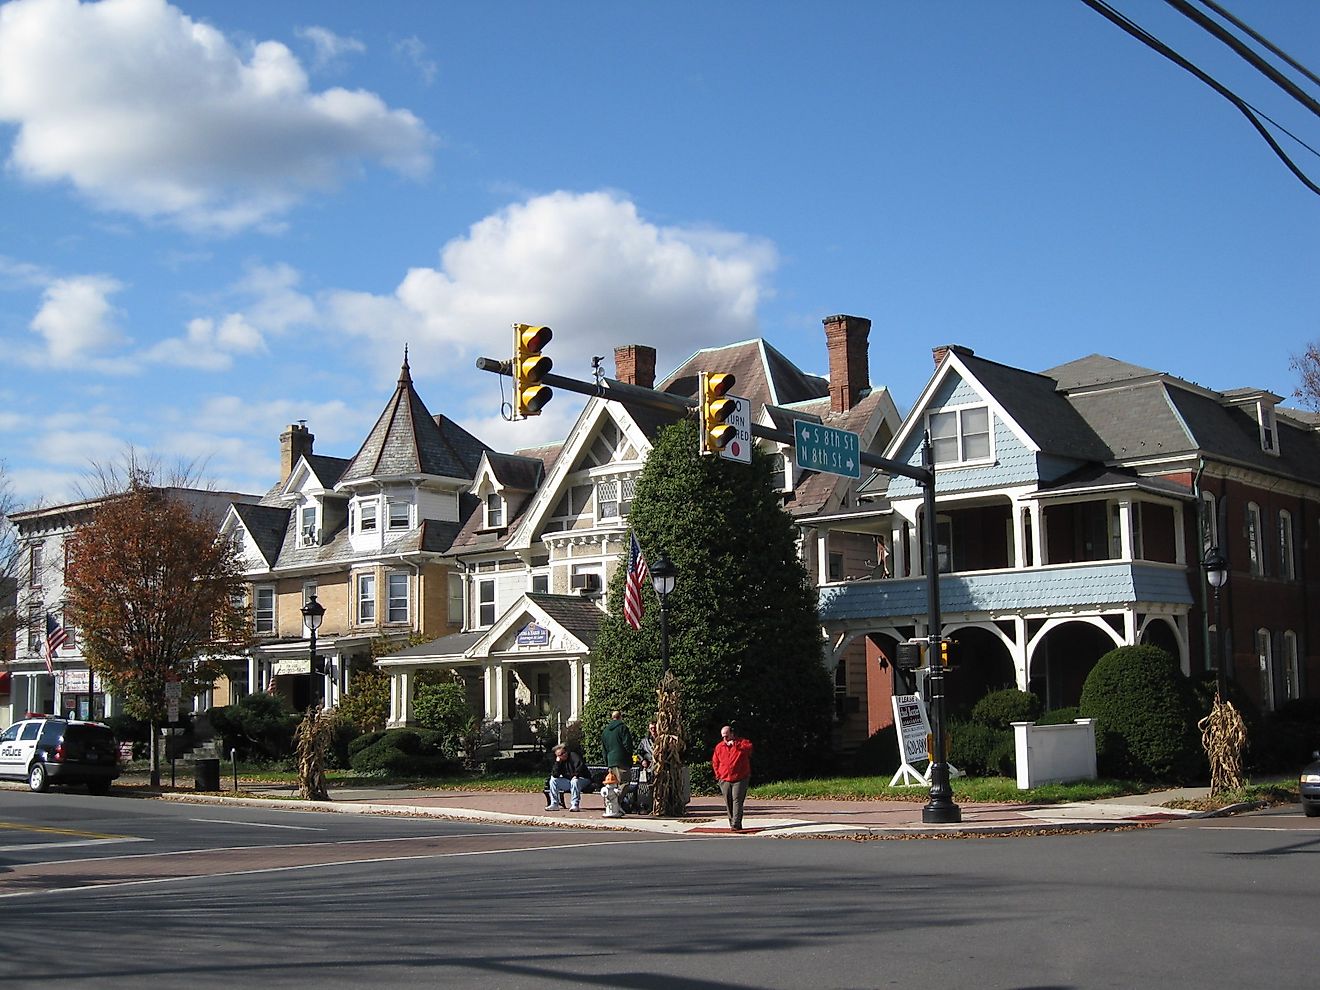 Stroudsburg, Pennsylvania. By Doug Kerr, CC BY-SA 2.0, Wikimedia Commons